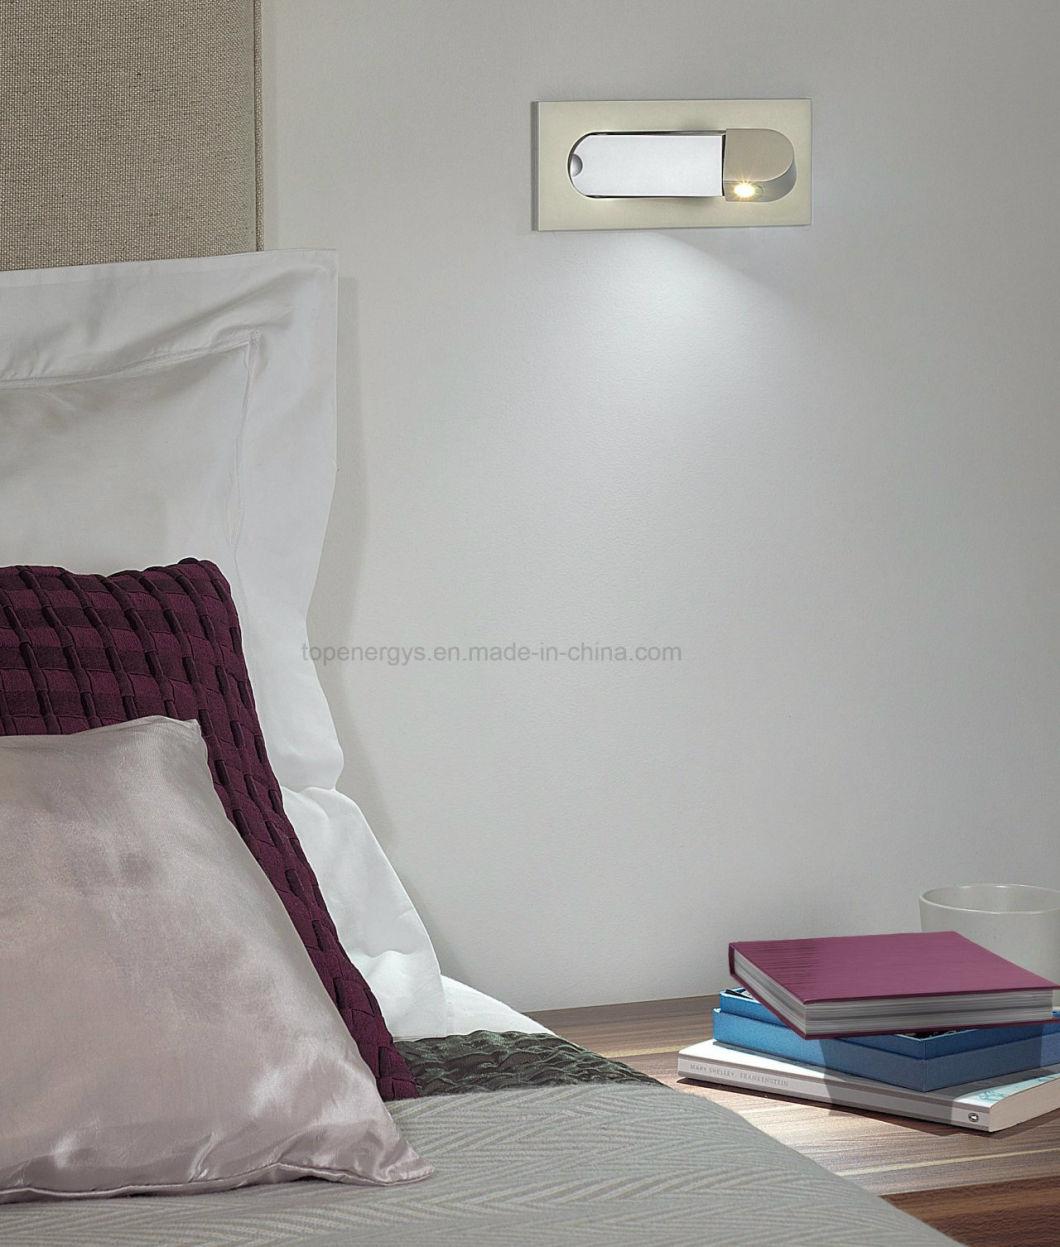 Rotatable LED Wall Lamp Bh-008 Decorative Adjustable Headboard Light Hotel Bedside Reading Light